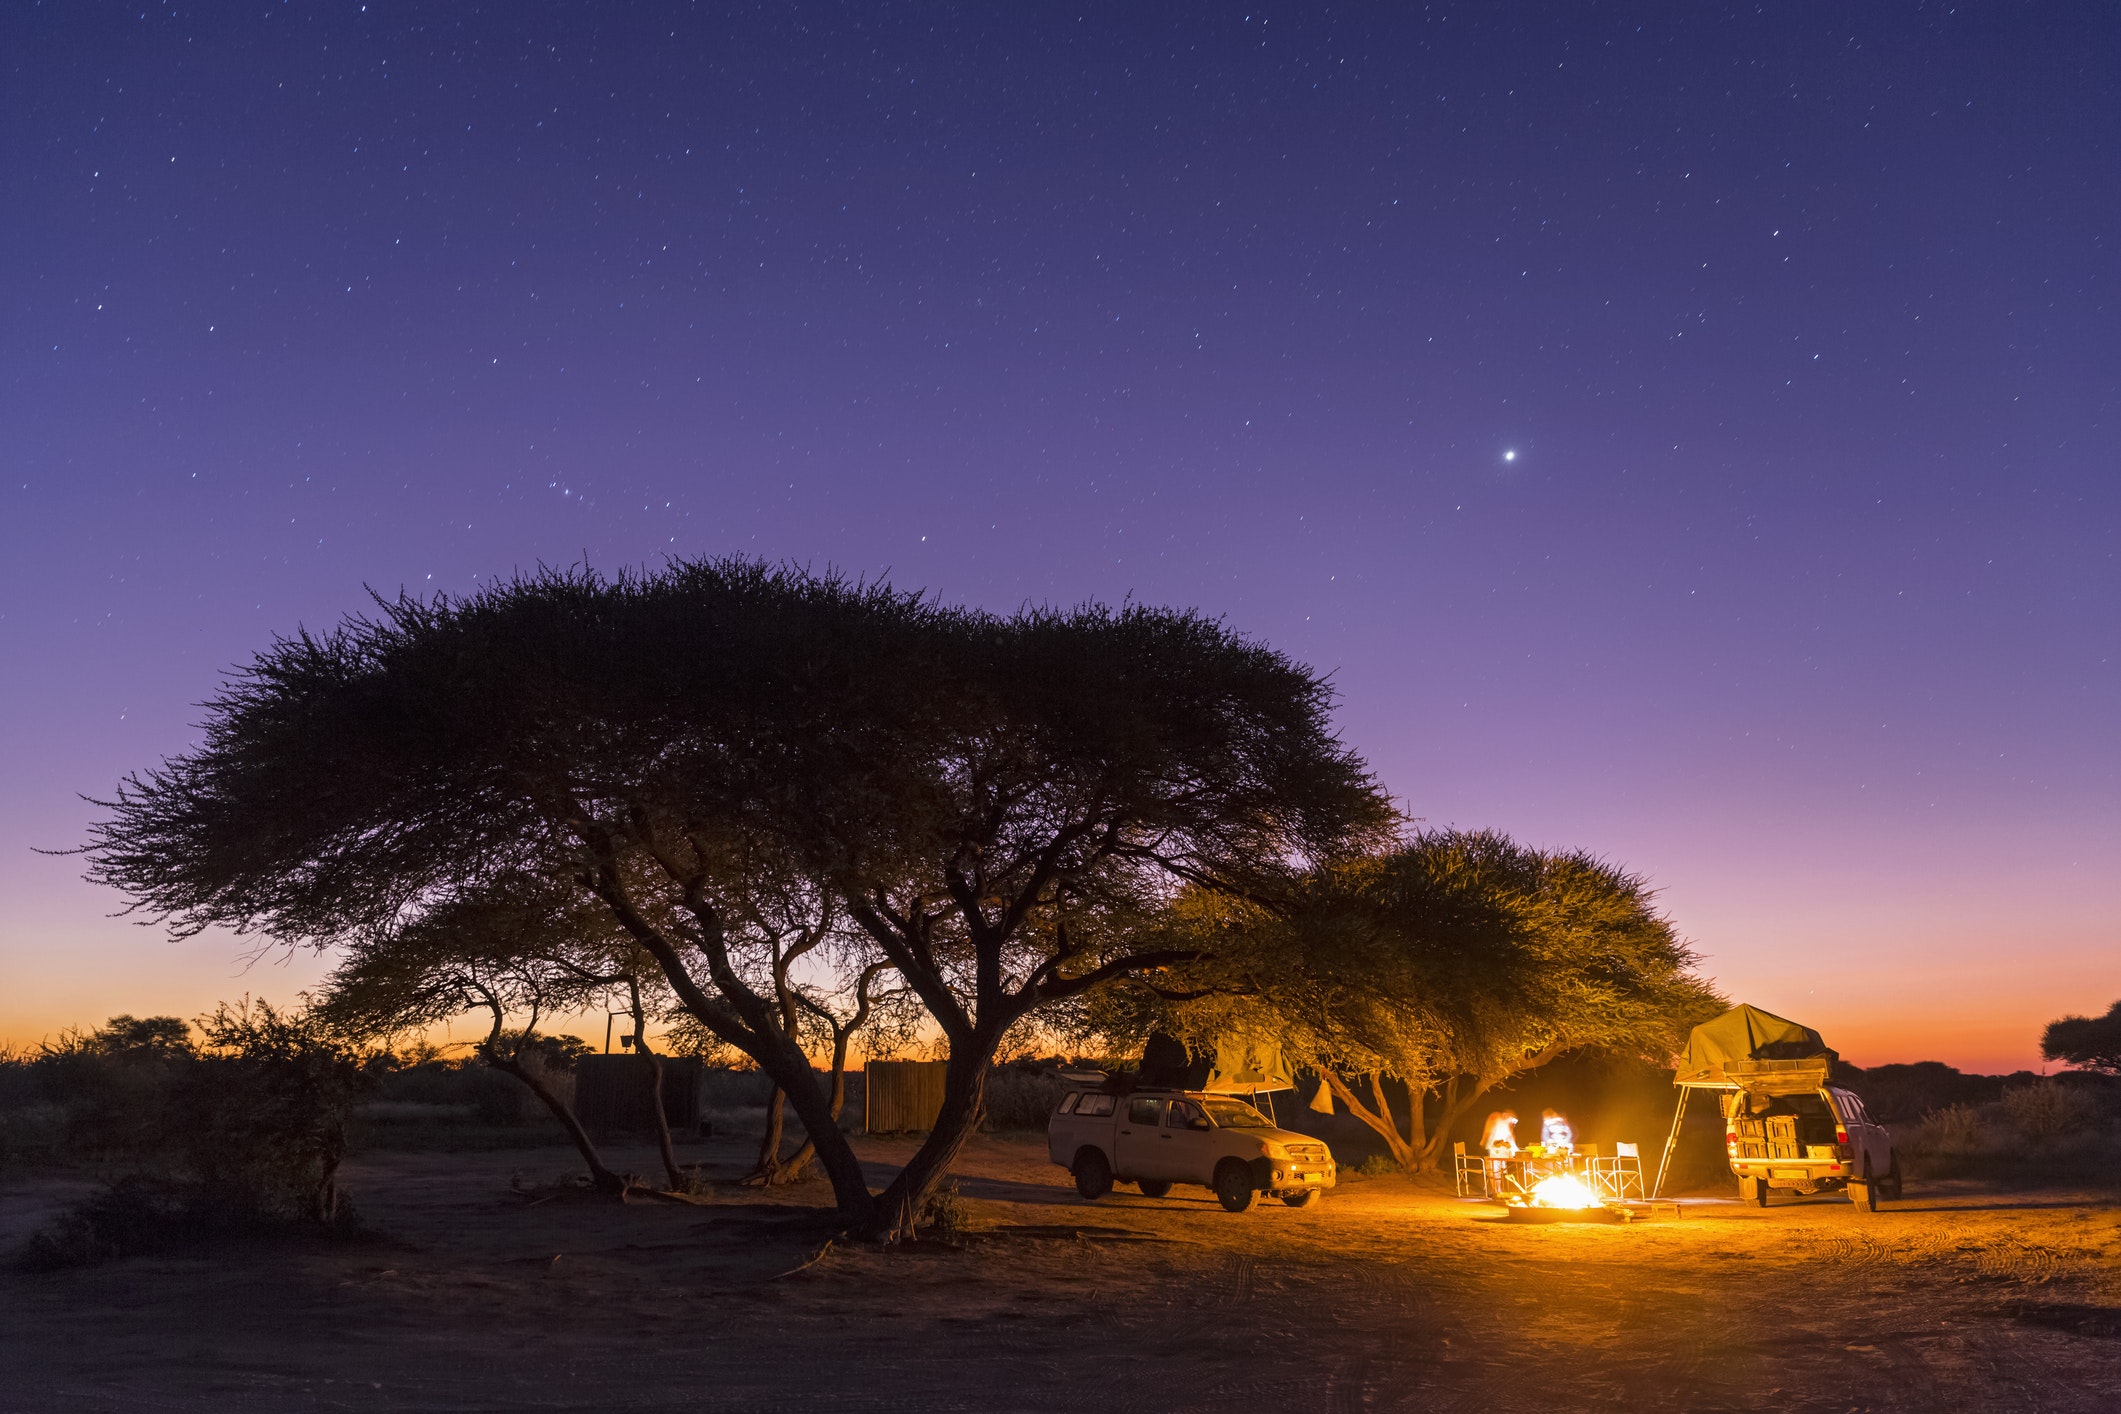 A campsite with a campfire under a starry sky 